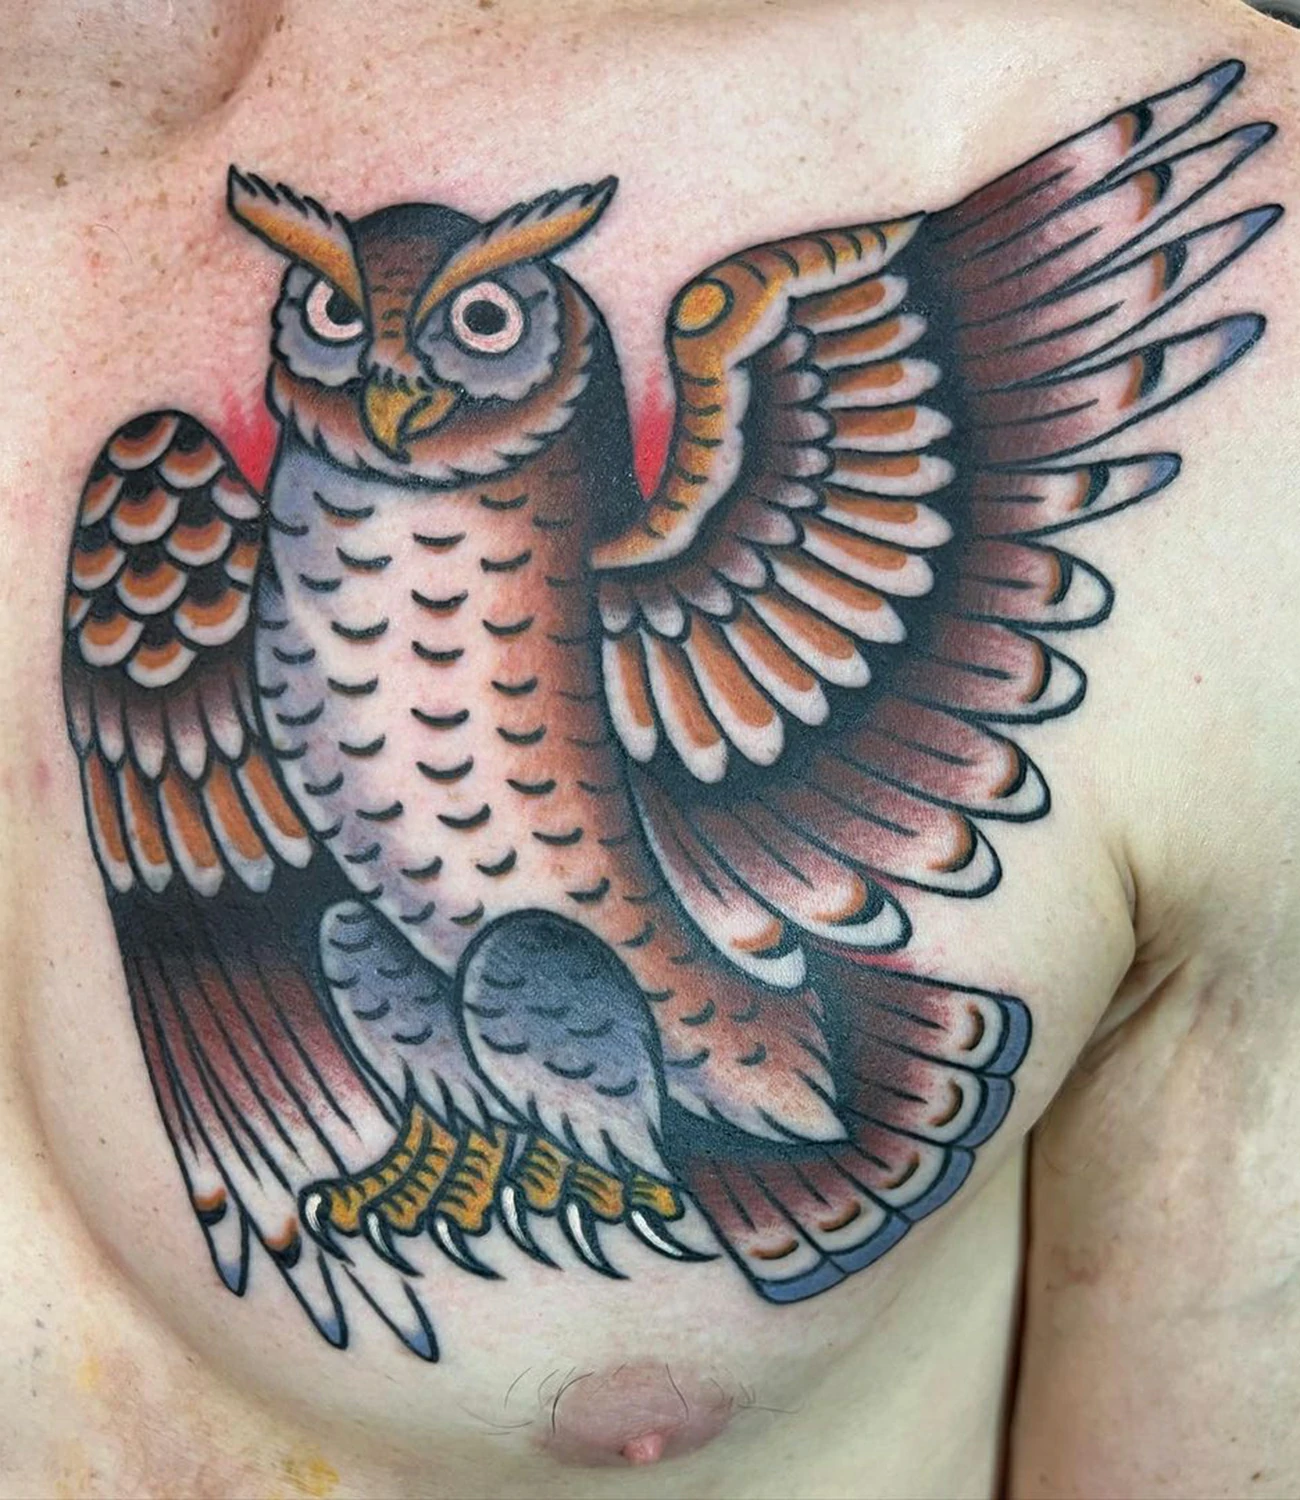 American Traditional Owl Tattoo